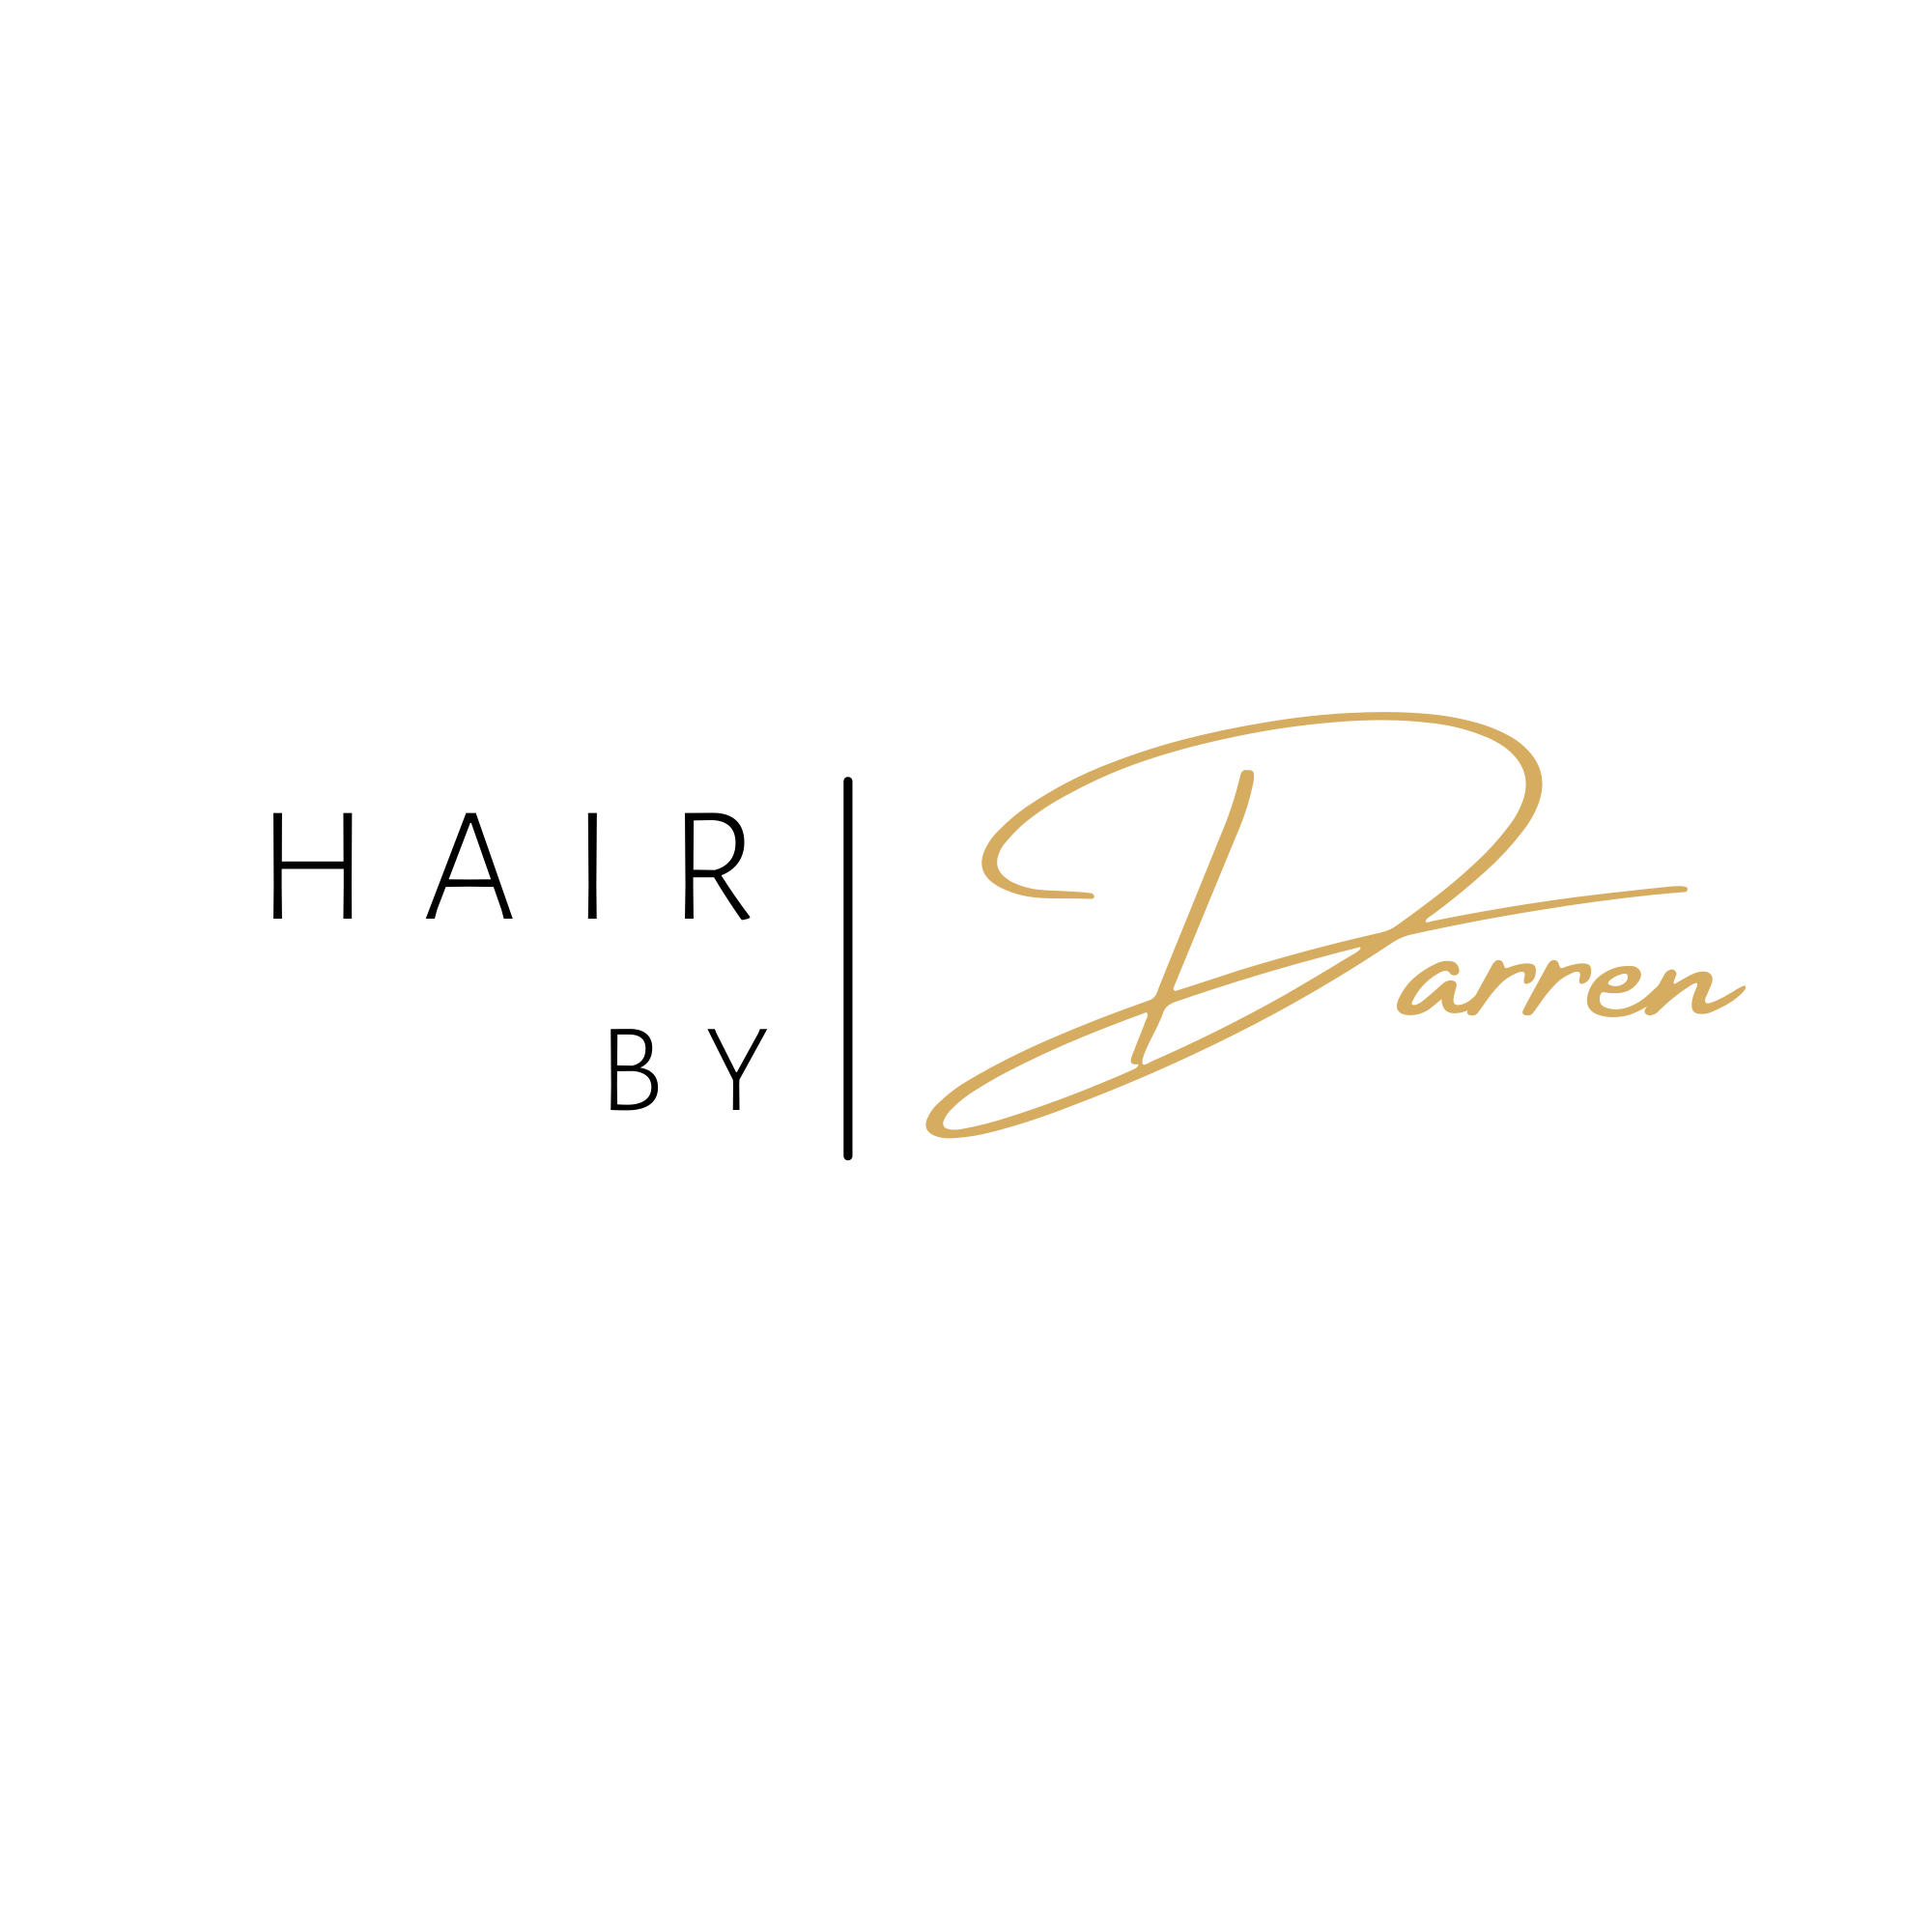 Main photo for Hair By Darren Ltd